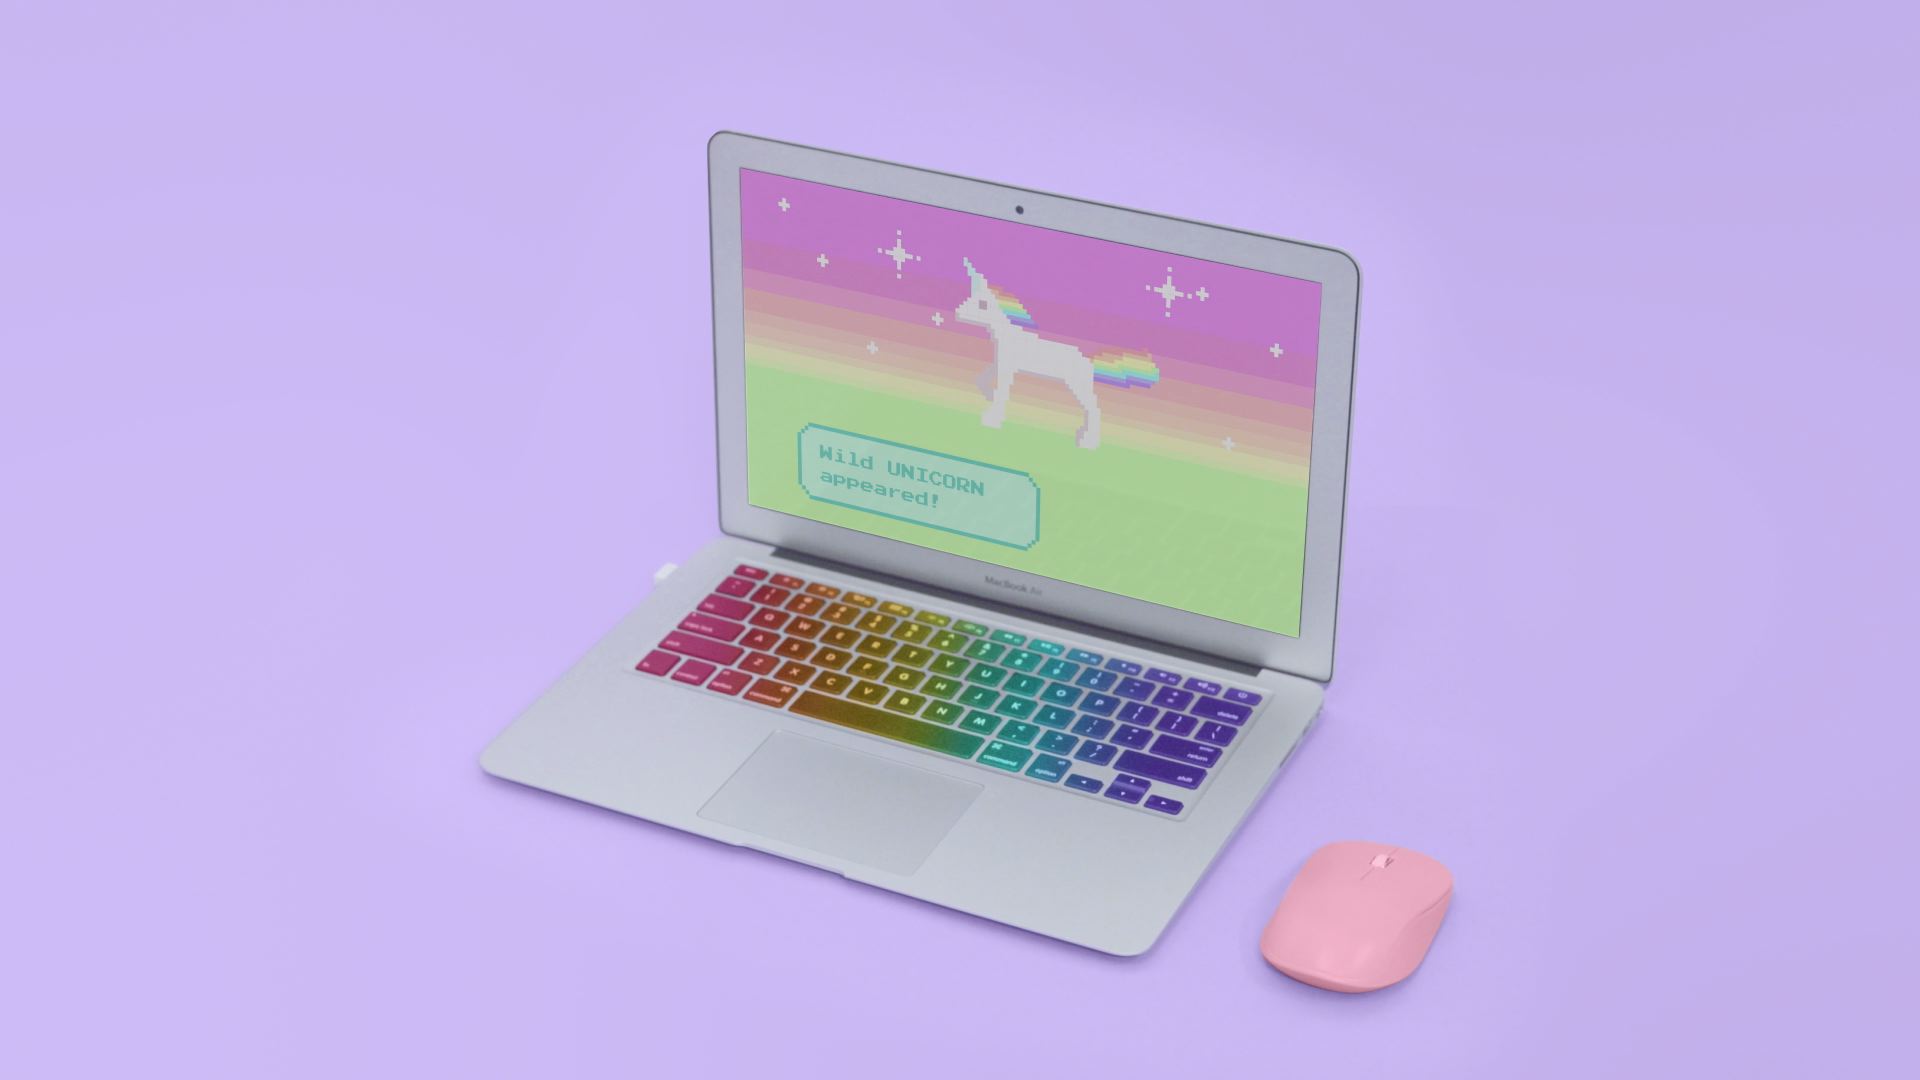 Unicorn on laptop